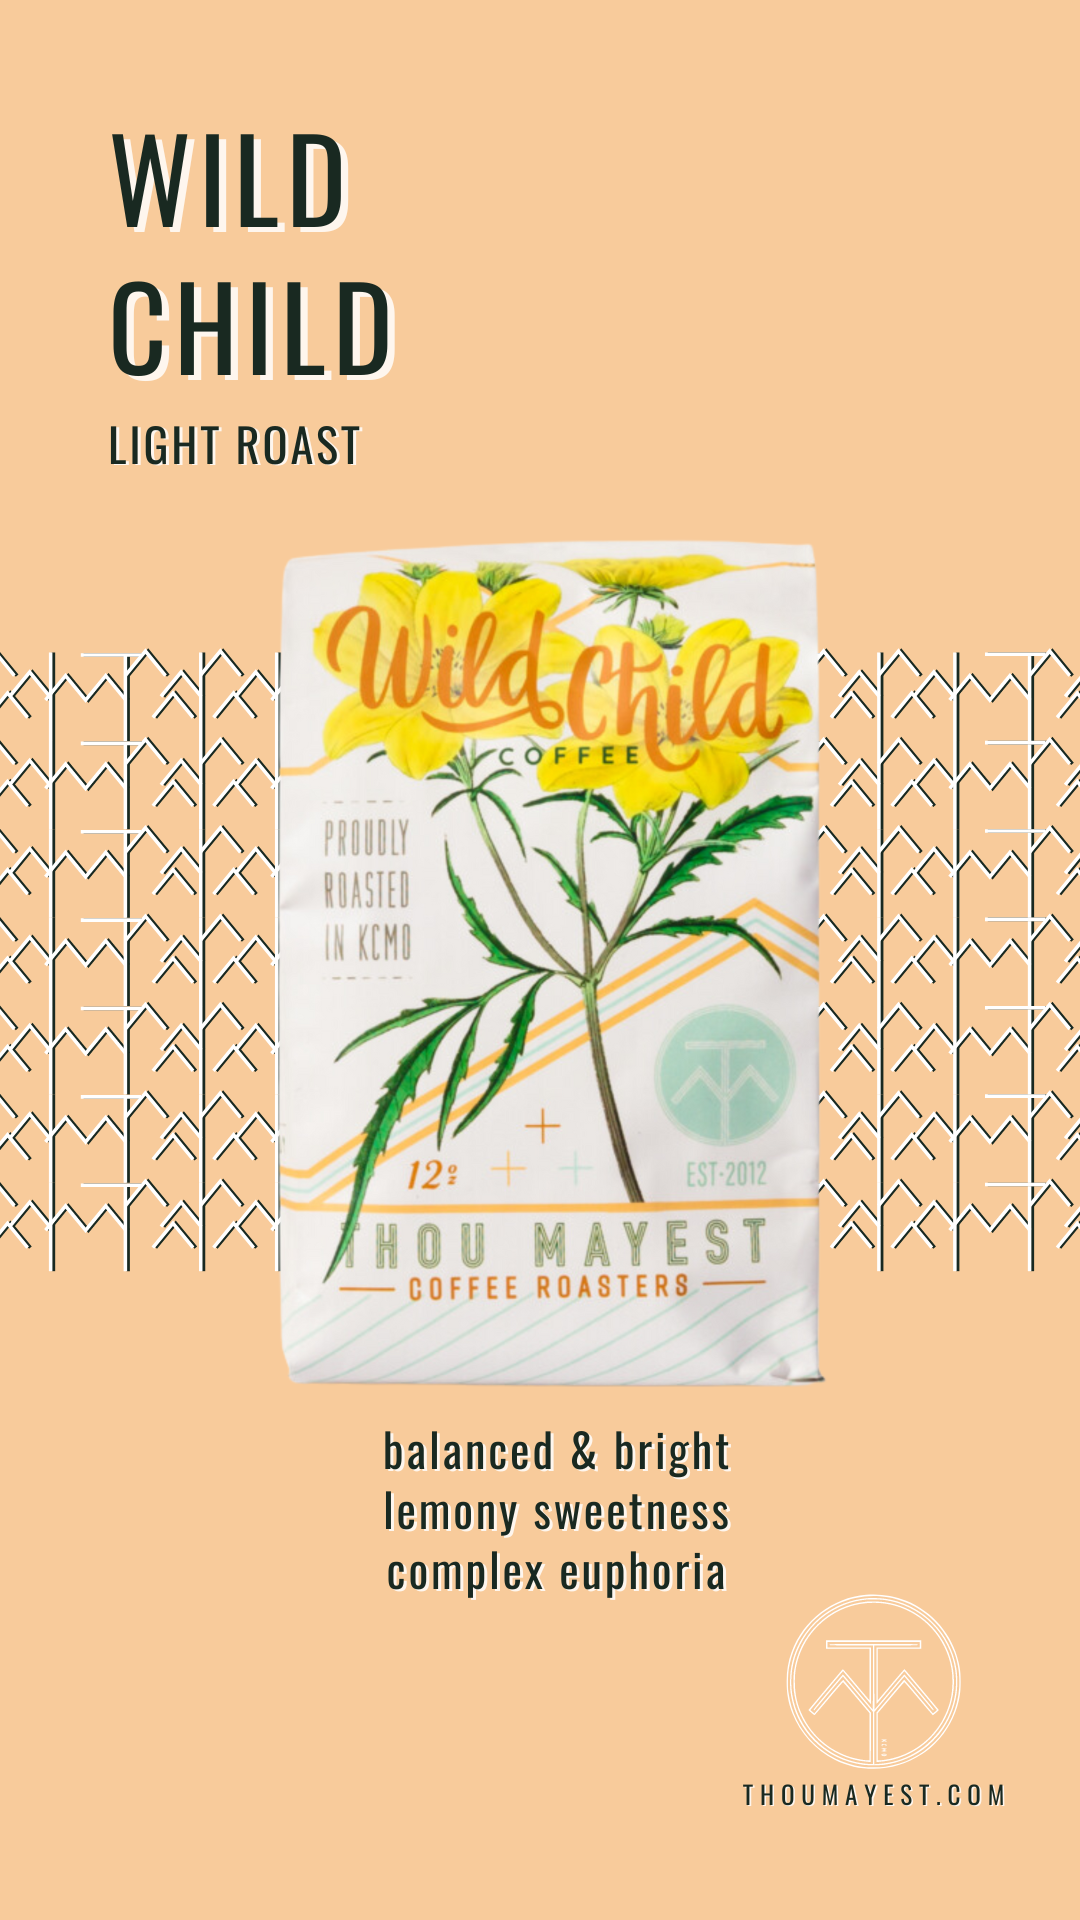 Image of Wild Child 12oz bag of coffee with description: Light roast. Balanced &amp; bright. Lemony sweetness. Complex euphoria.